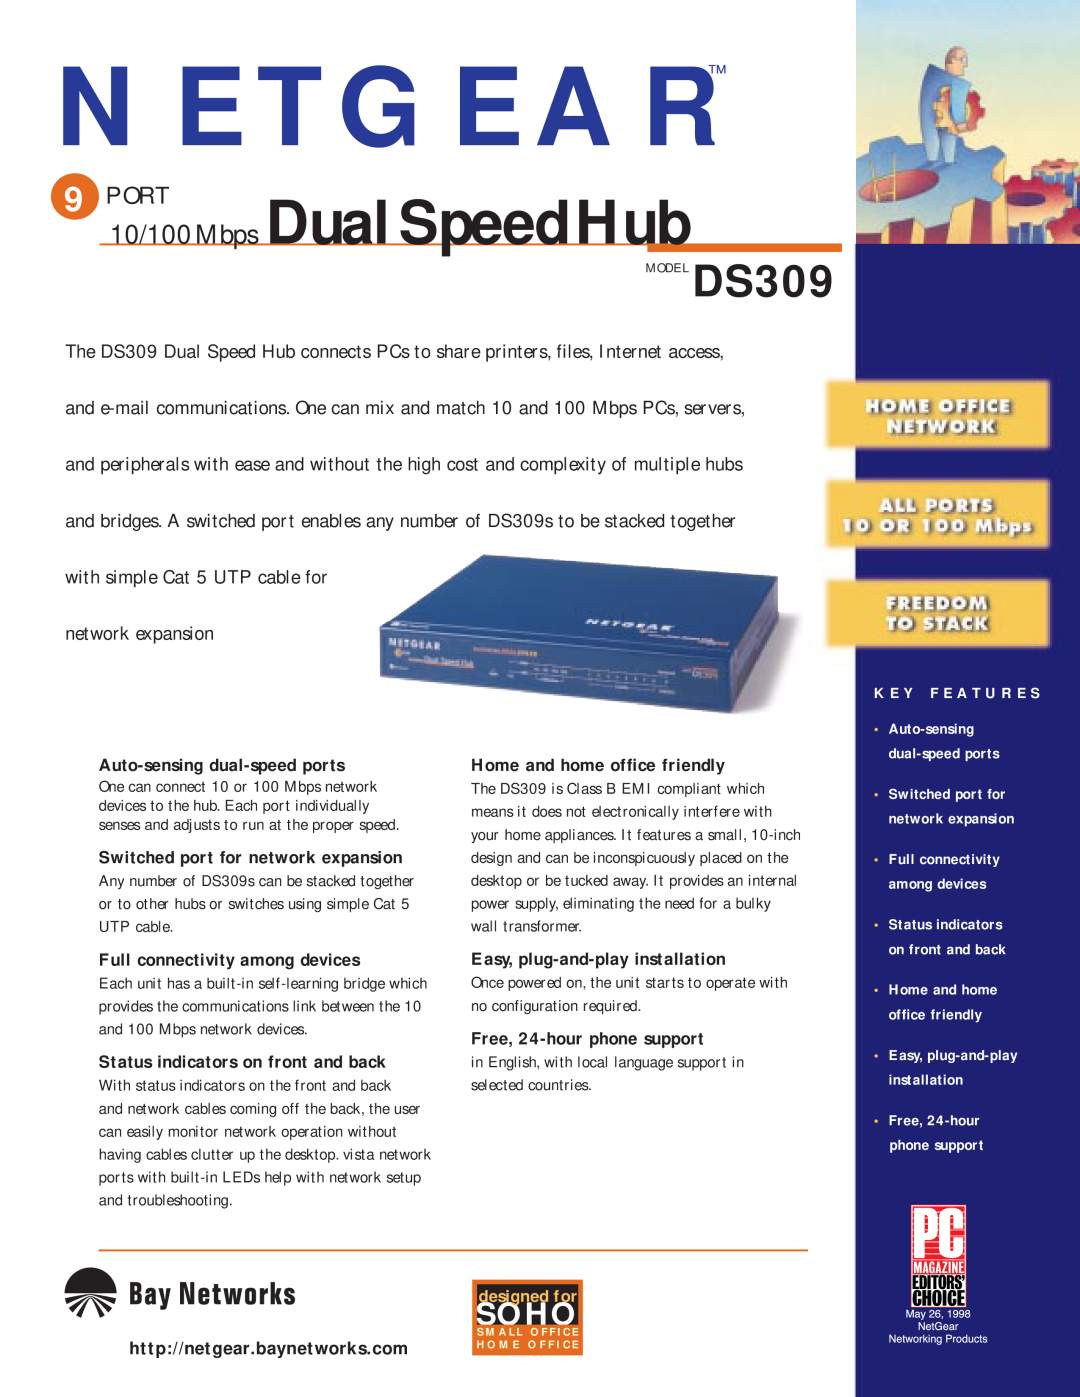 NETGEAR DS309 manual N E T G E A R, Soho, 10/100 Mbps DualSpeedHub, Port, Auto-sensing dual-speed ports 